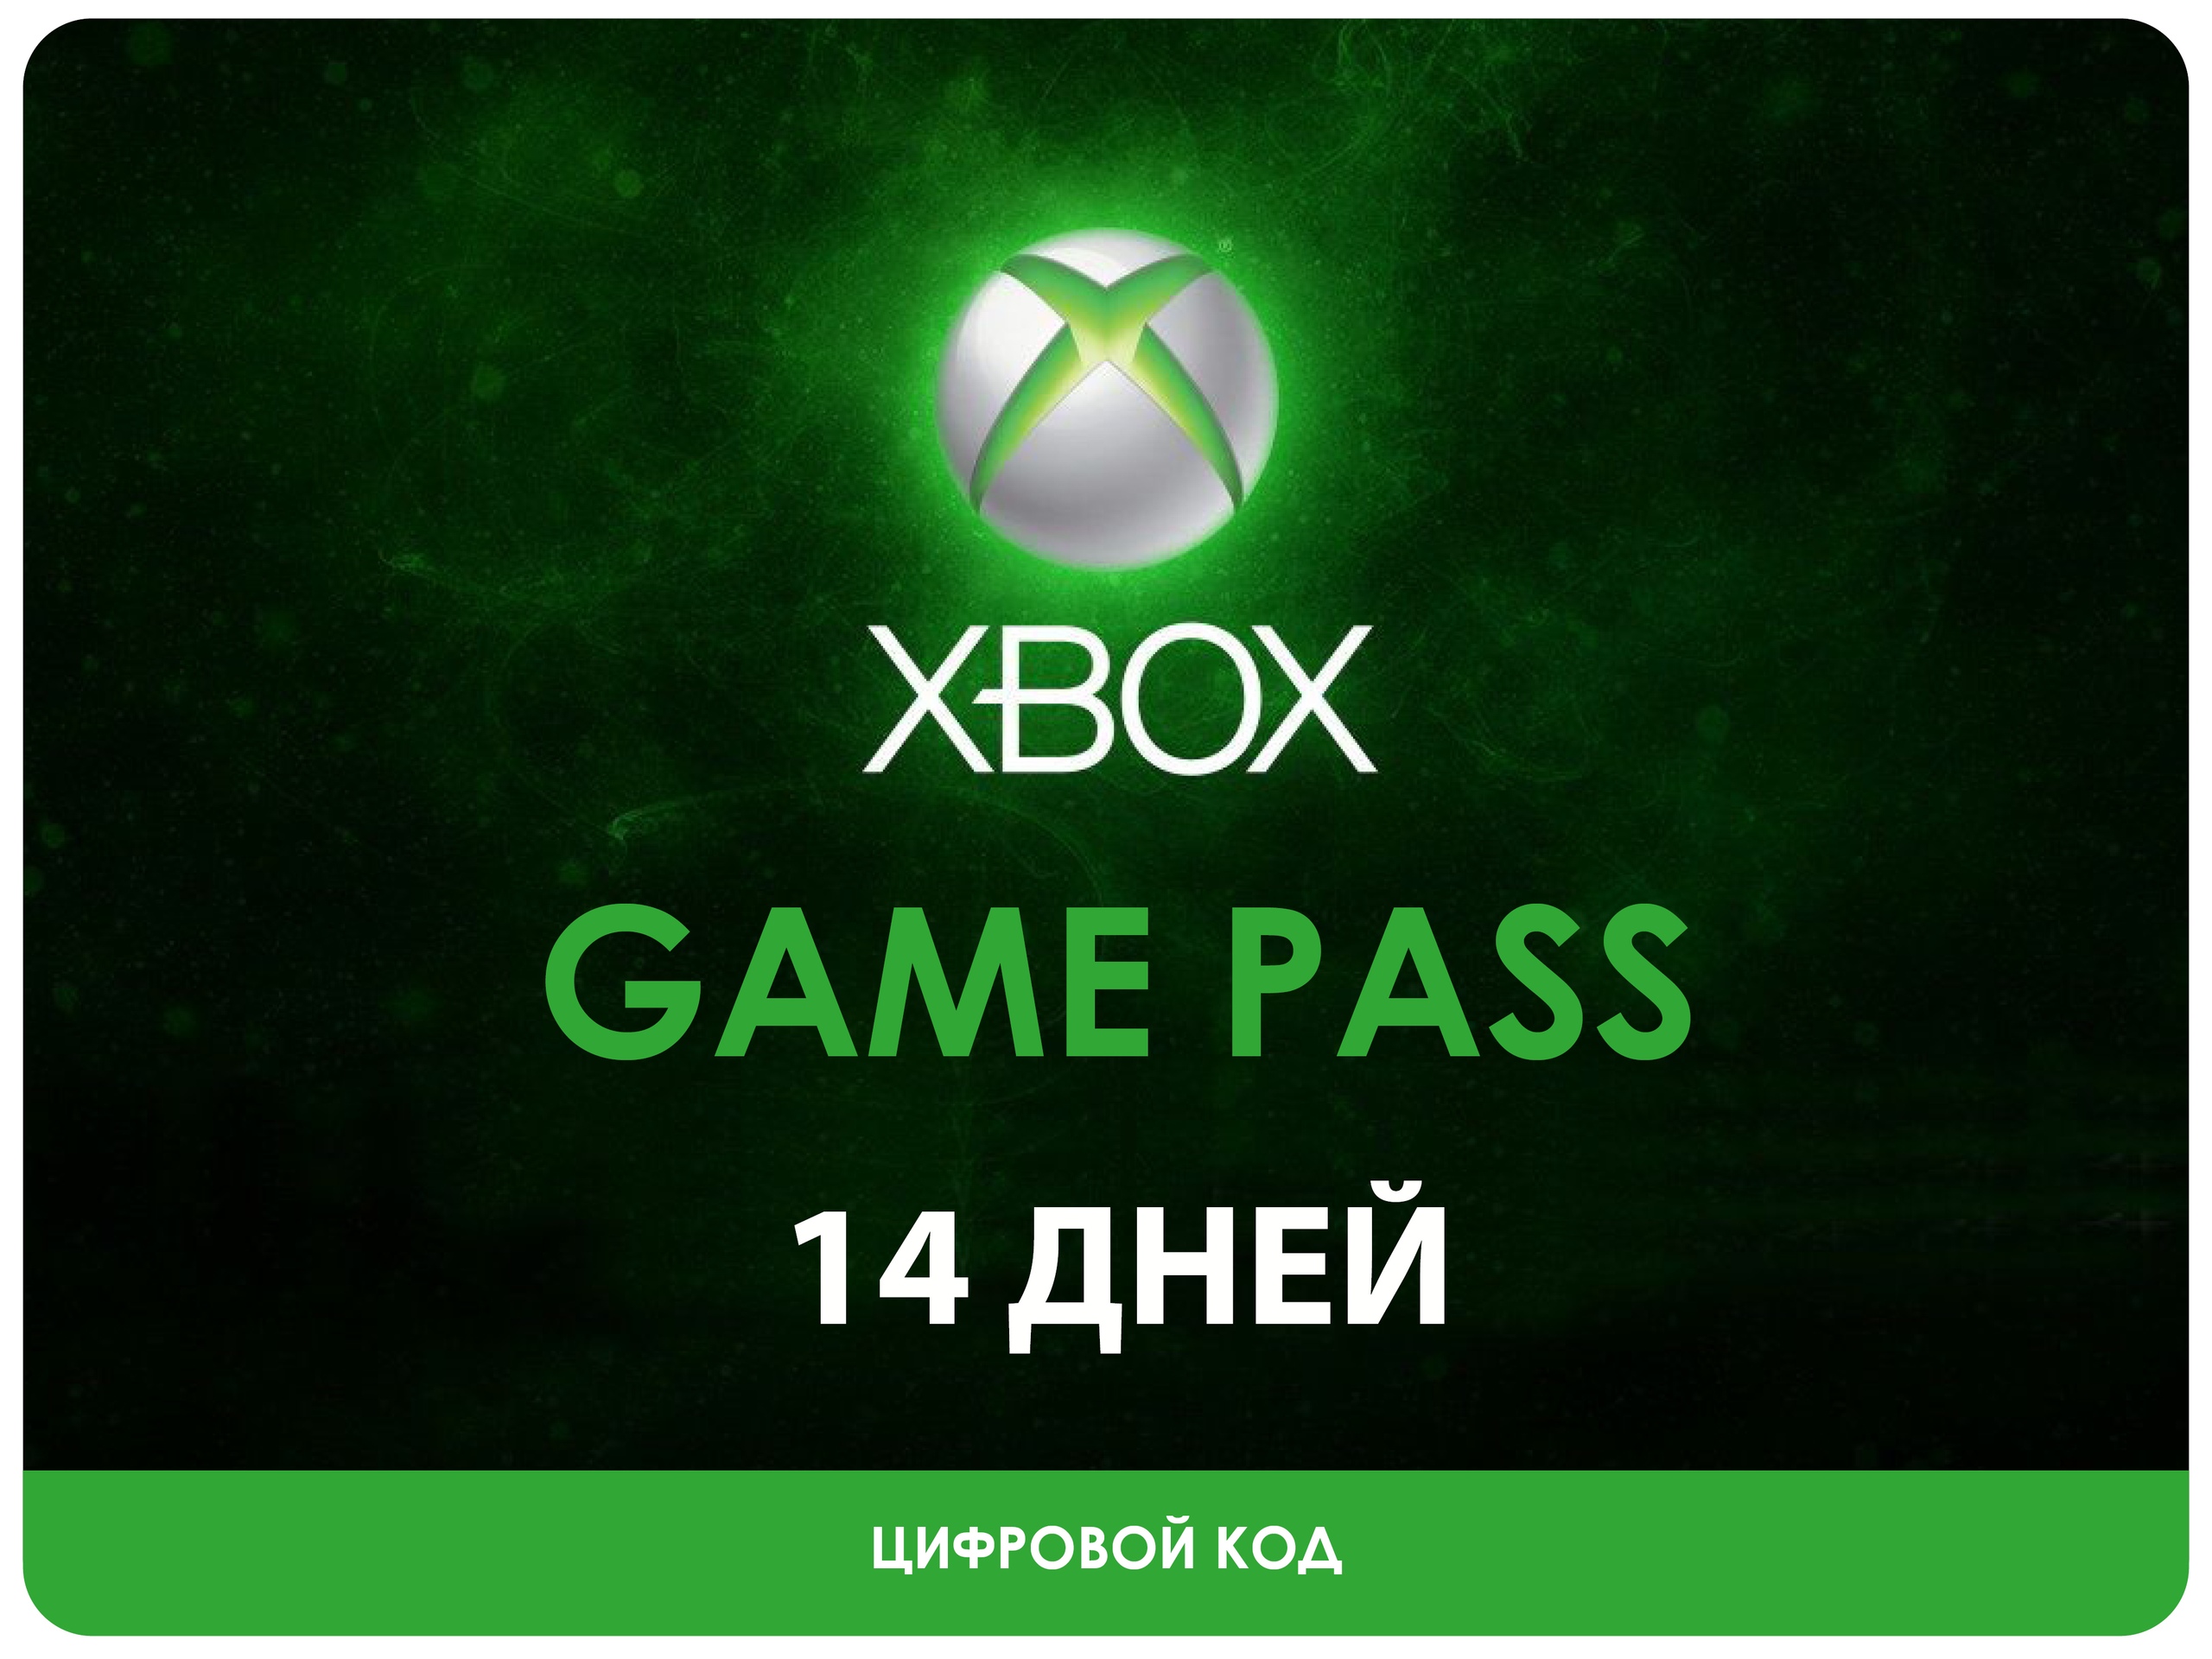 🦄Xbox Game Pass 14 days  Xbox One 🌎 RENEWAL